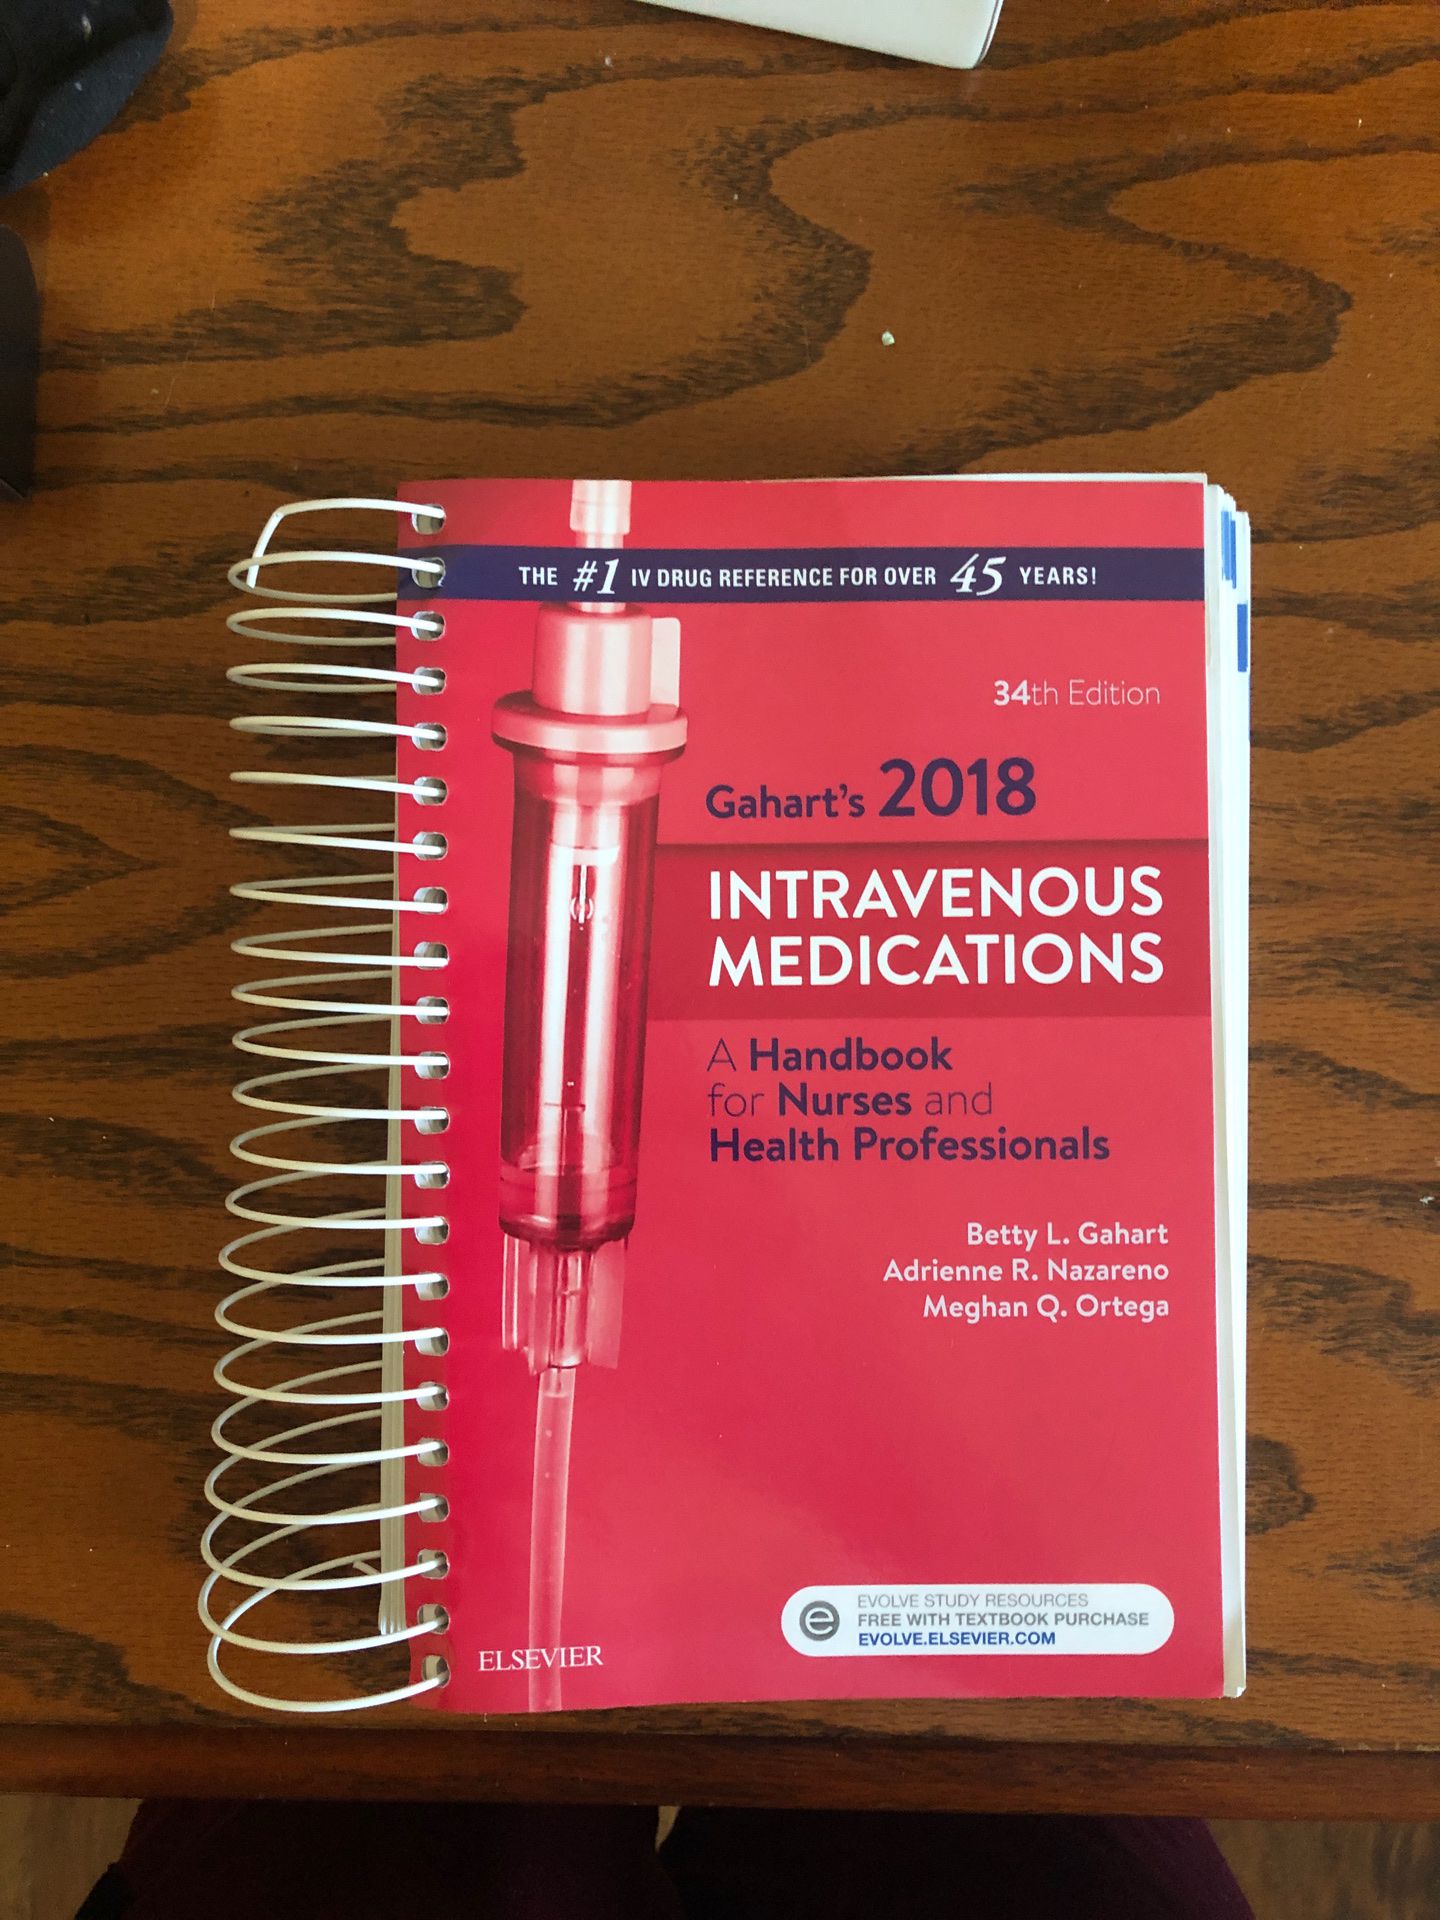 Garharts 2018 Intravenous Medications for nurces